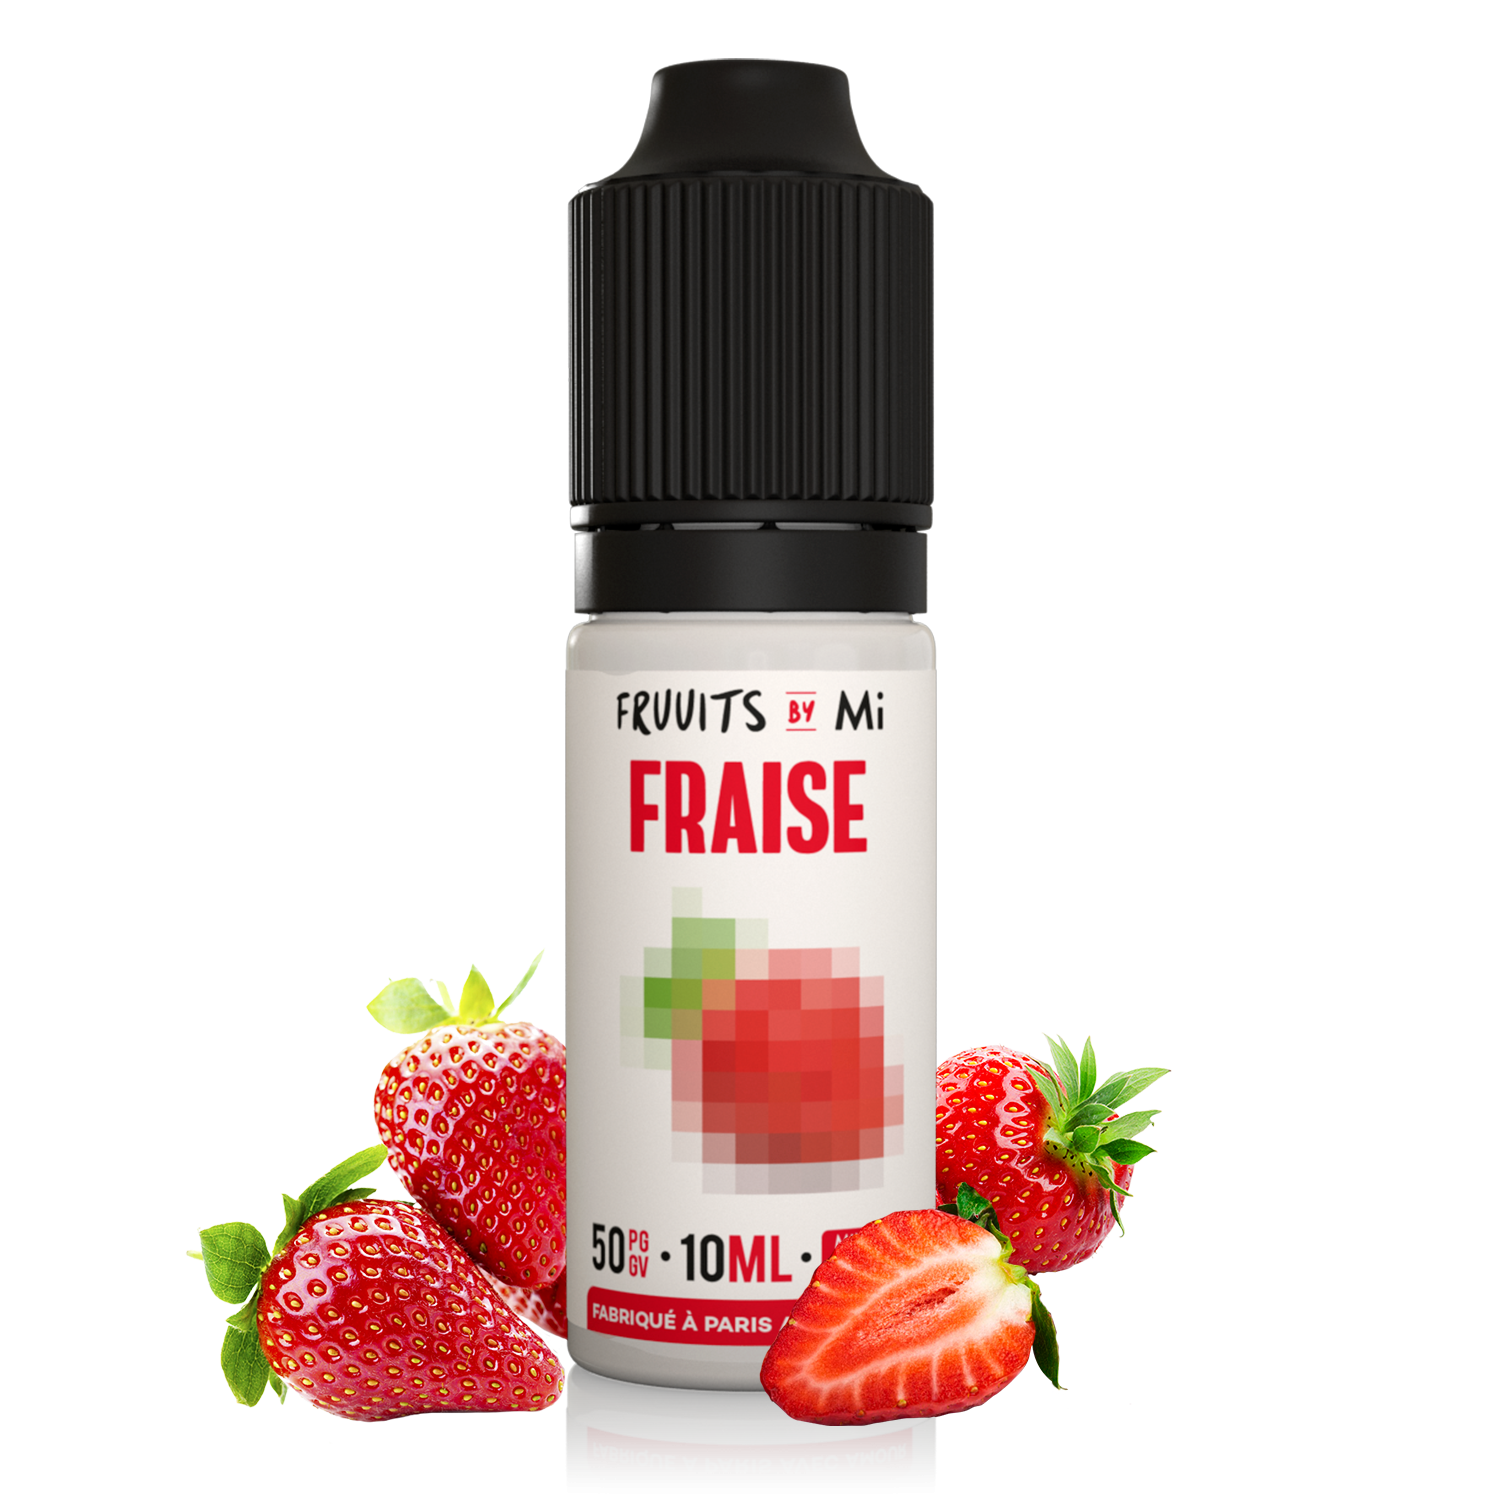 Fuu Prime salts - Strawberry